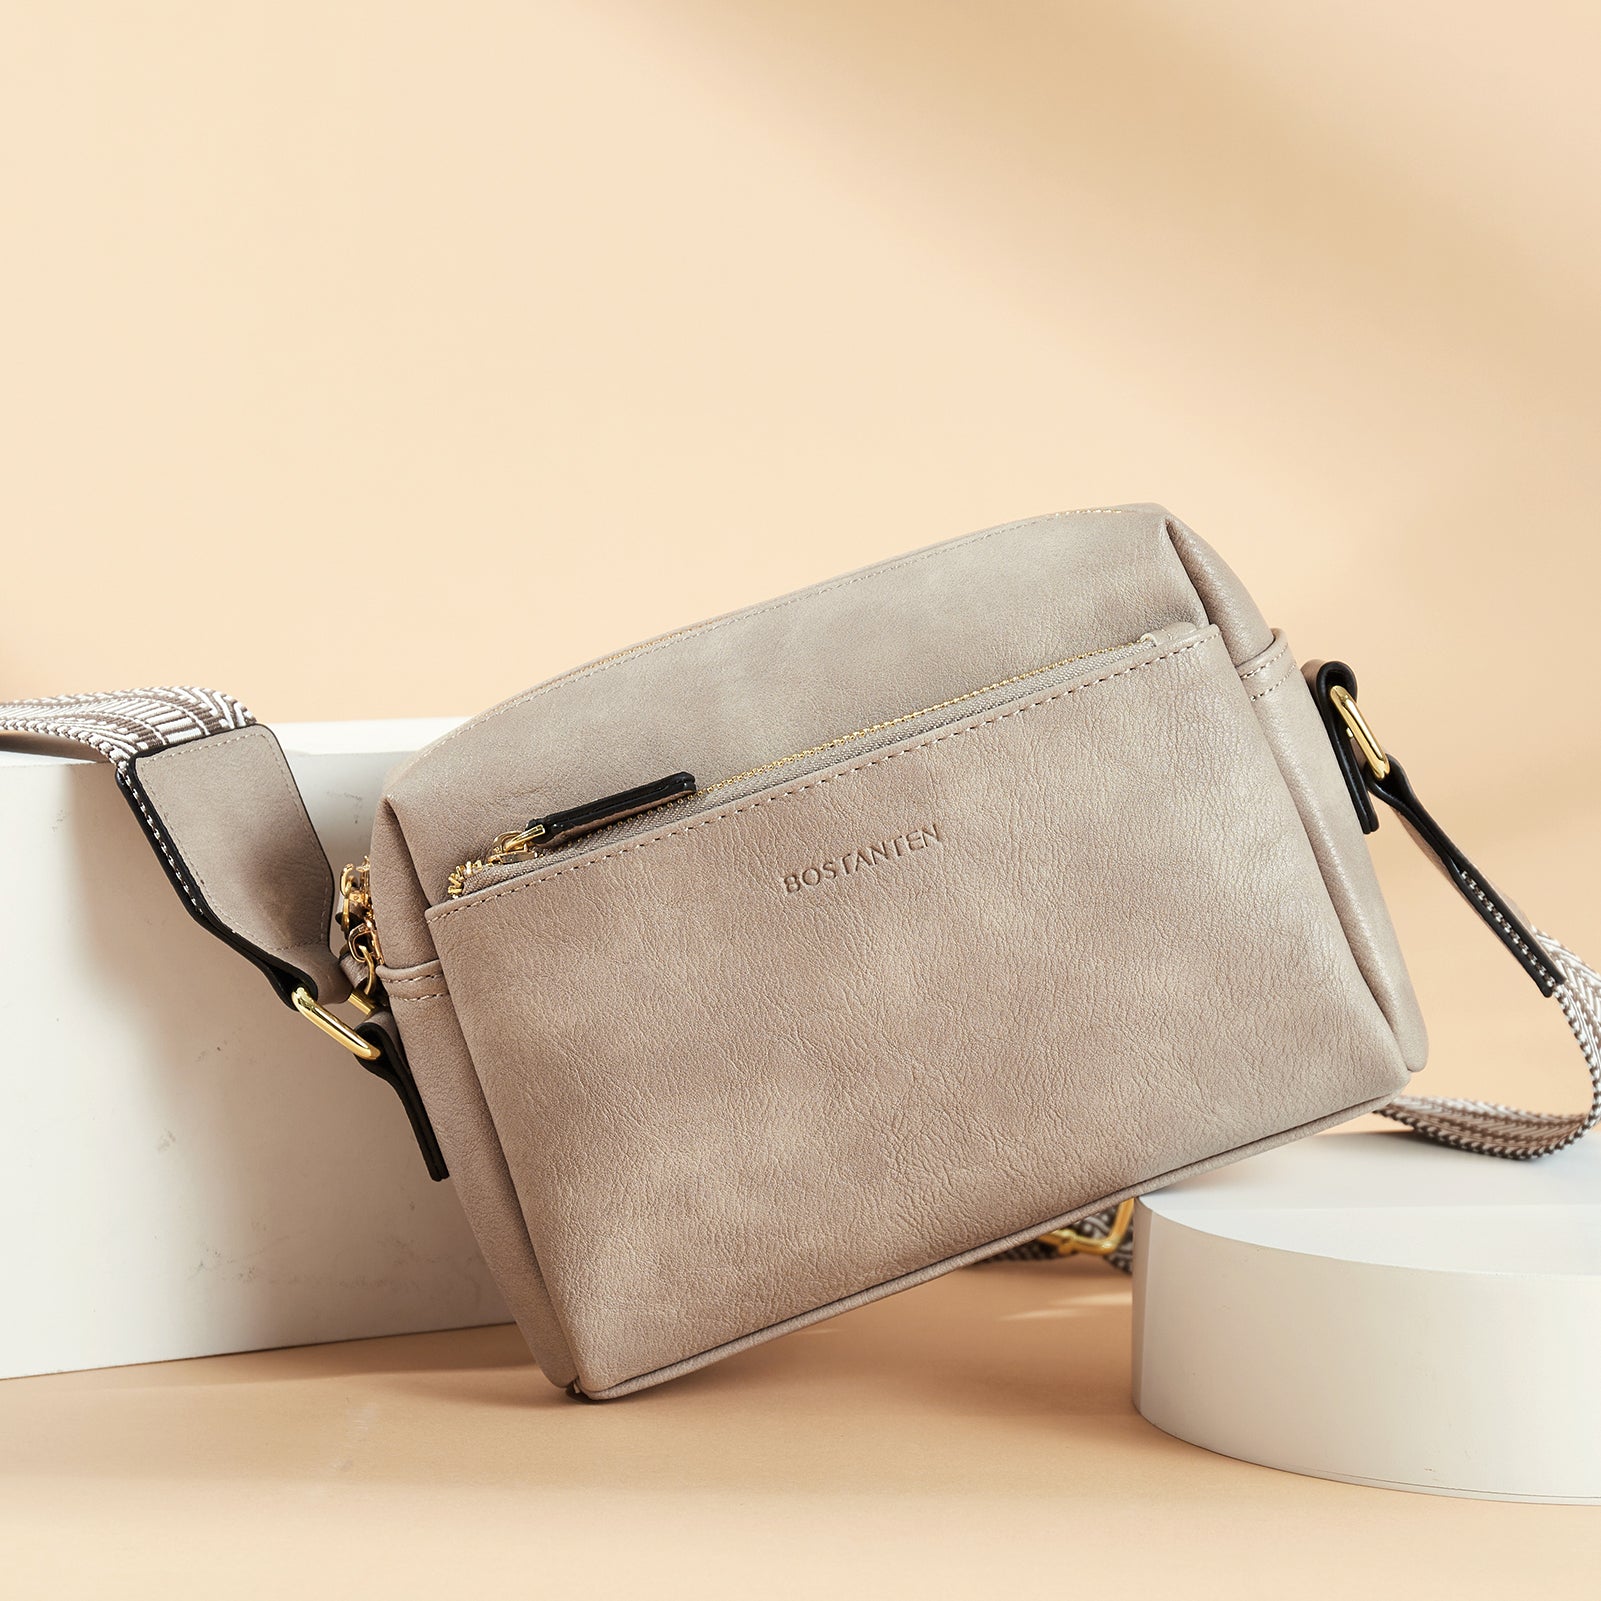 Triple Zip Cell Phone Leather Handbag - Organize Your Essentials